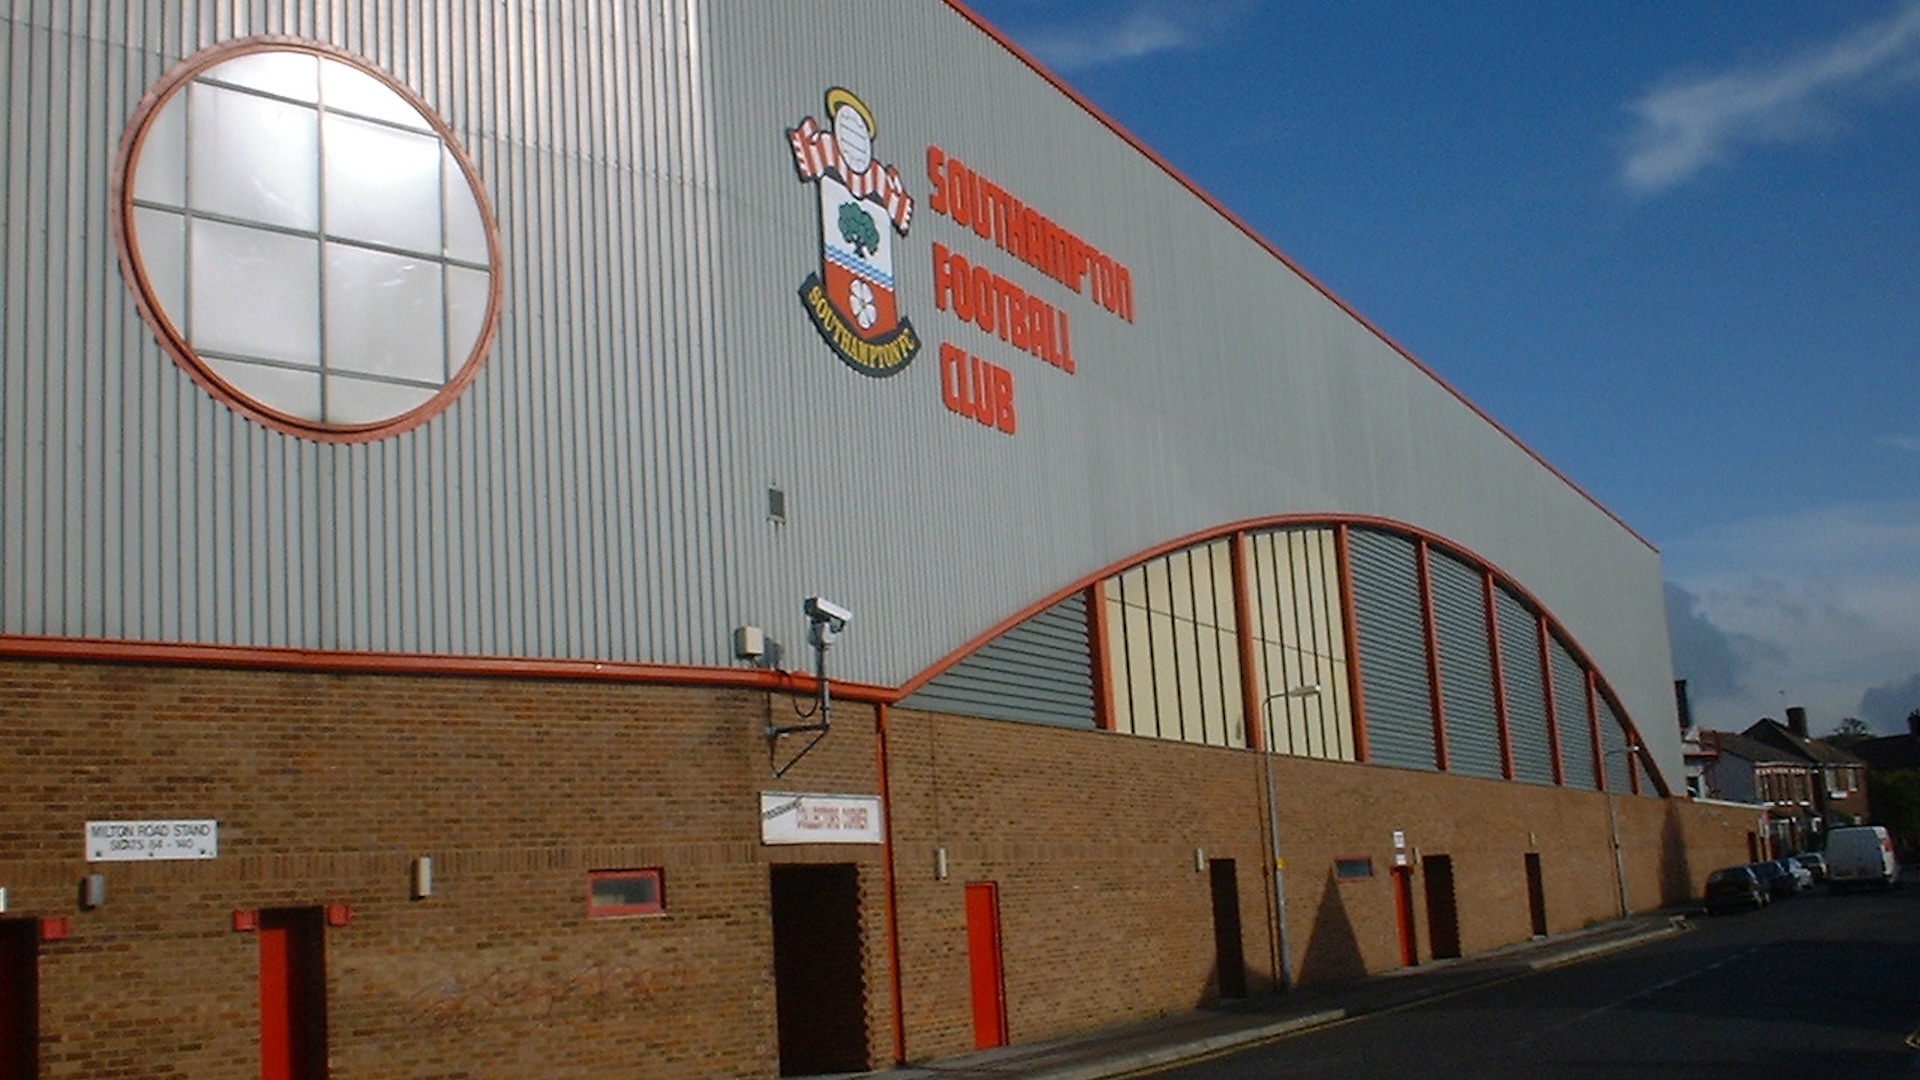 Southampton's former ground